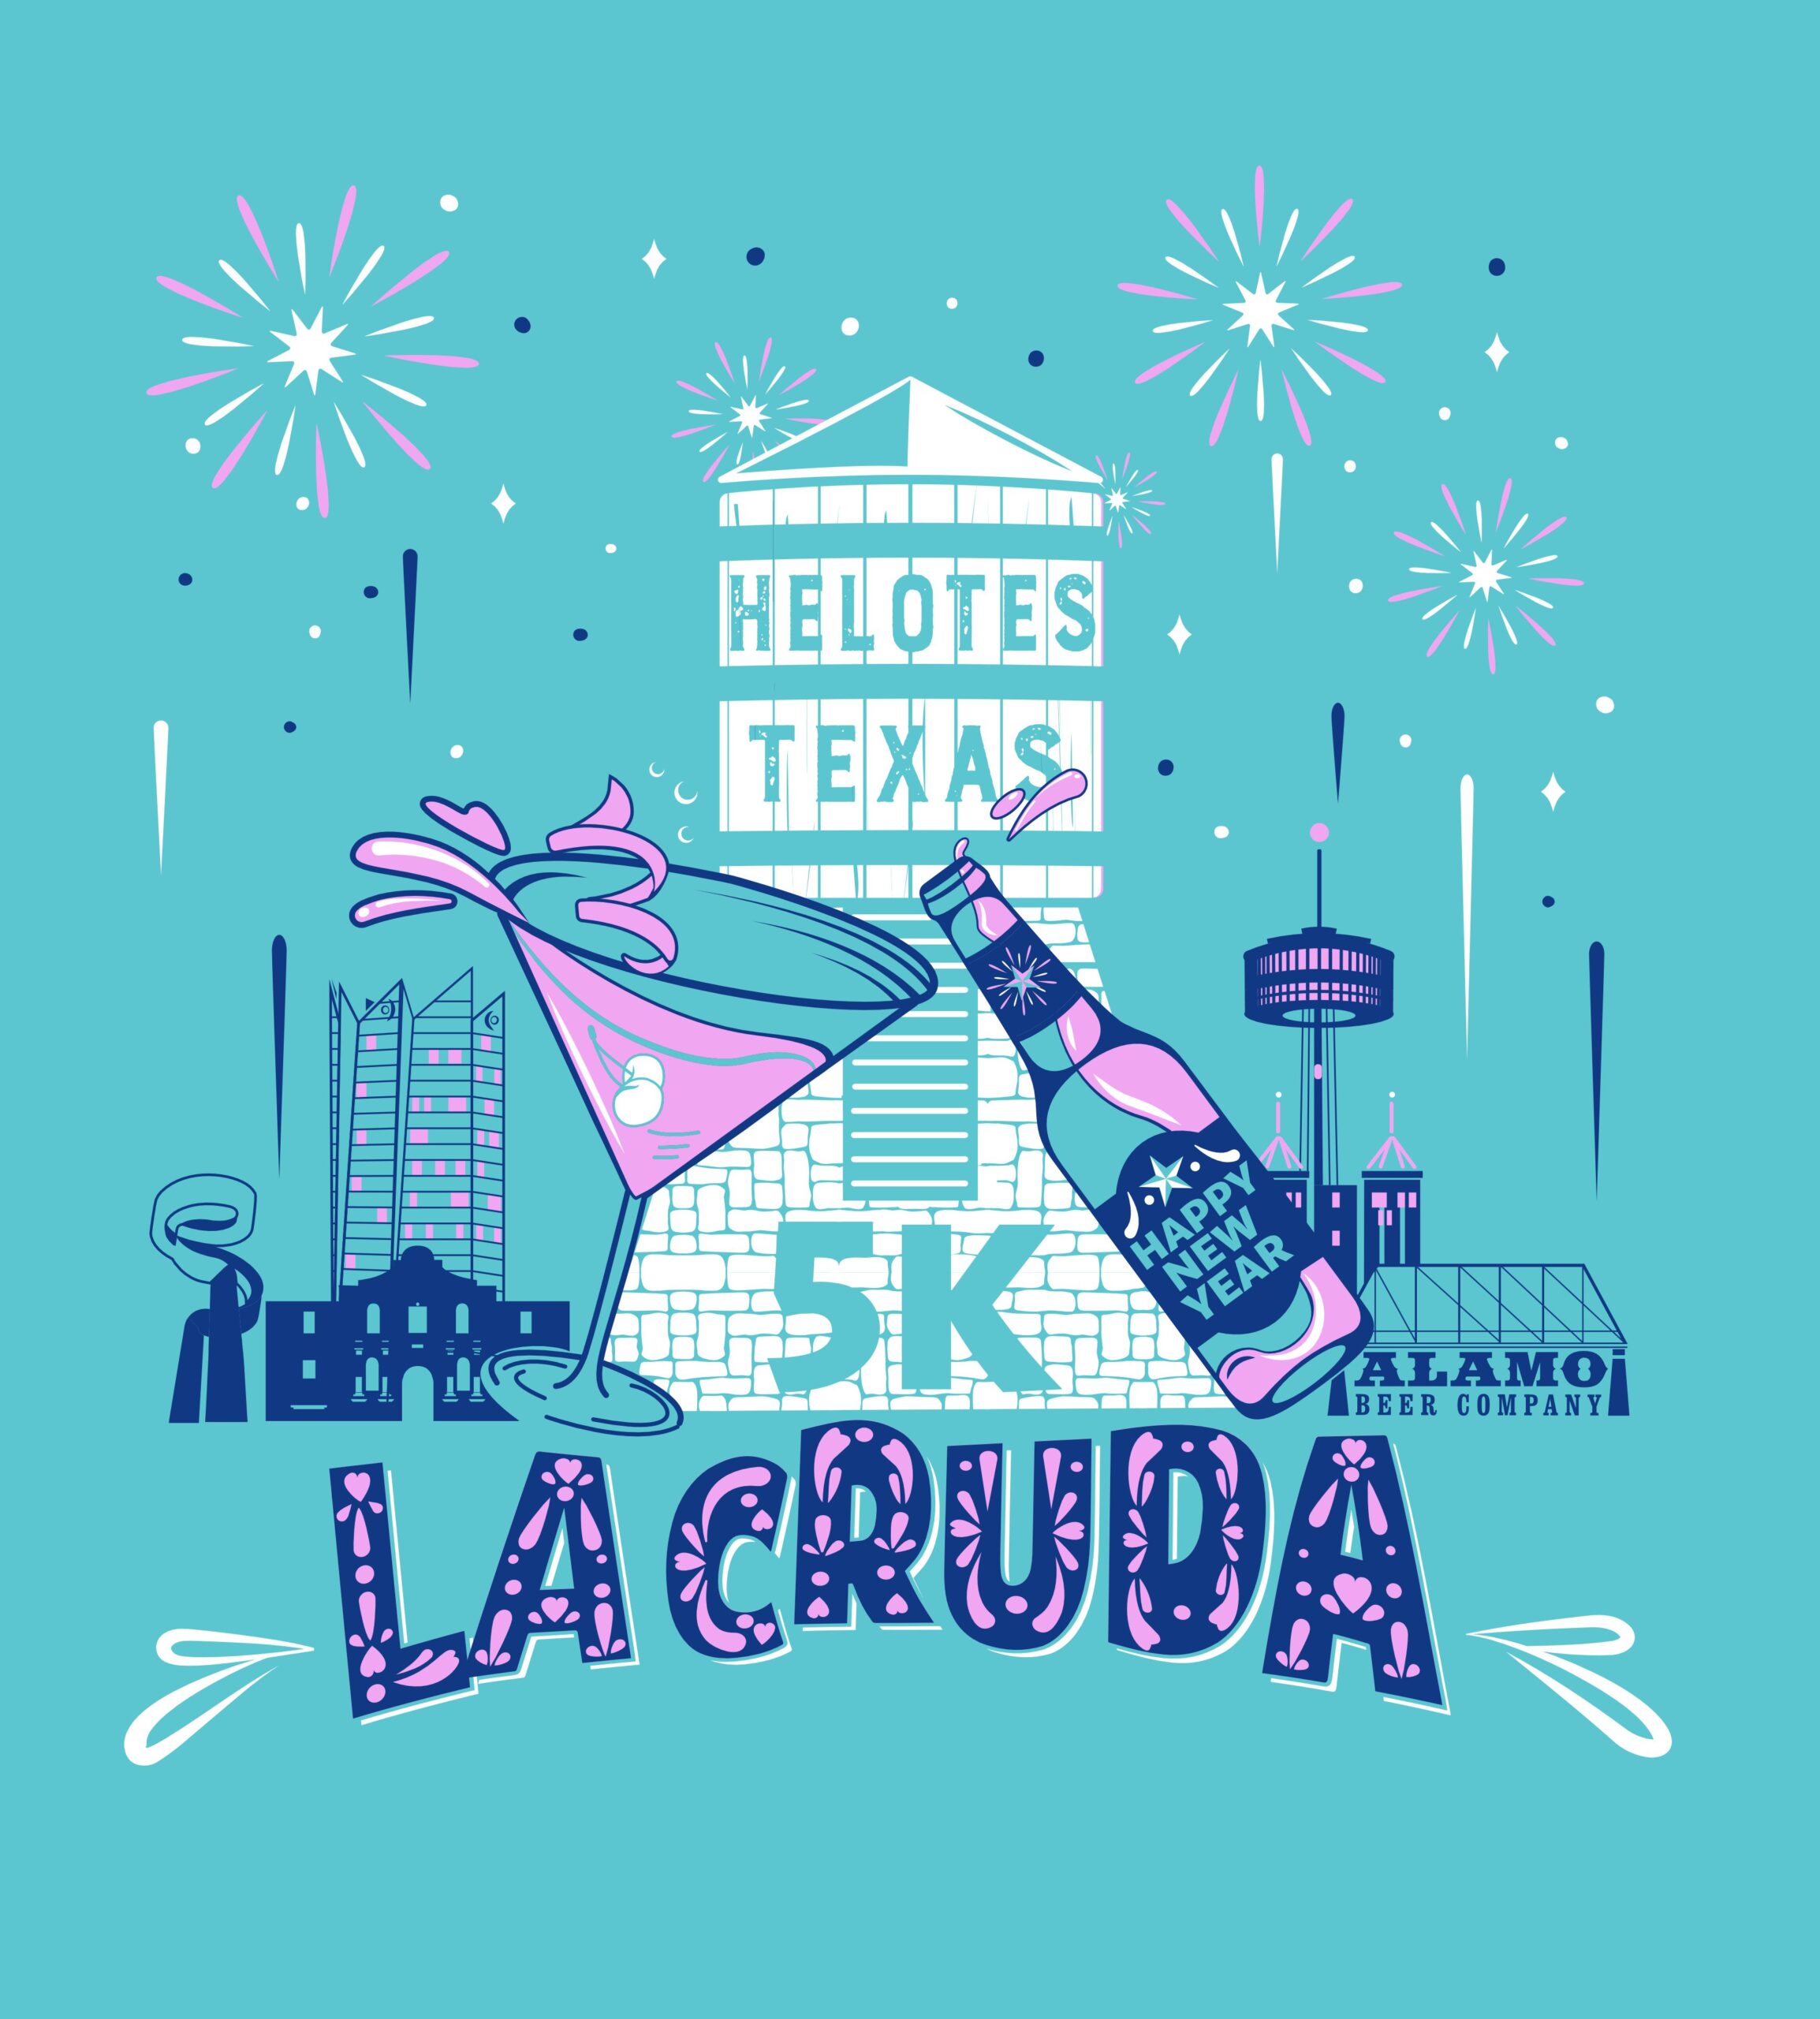 La Cruda 5K logo on RaceRaves